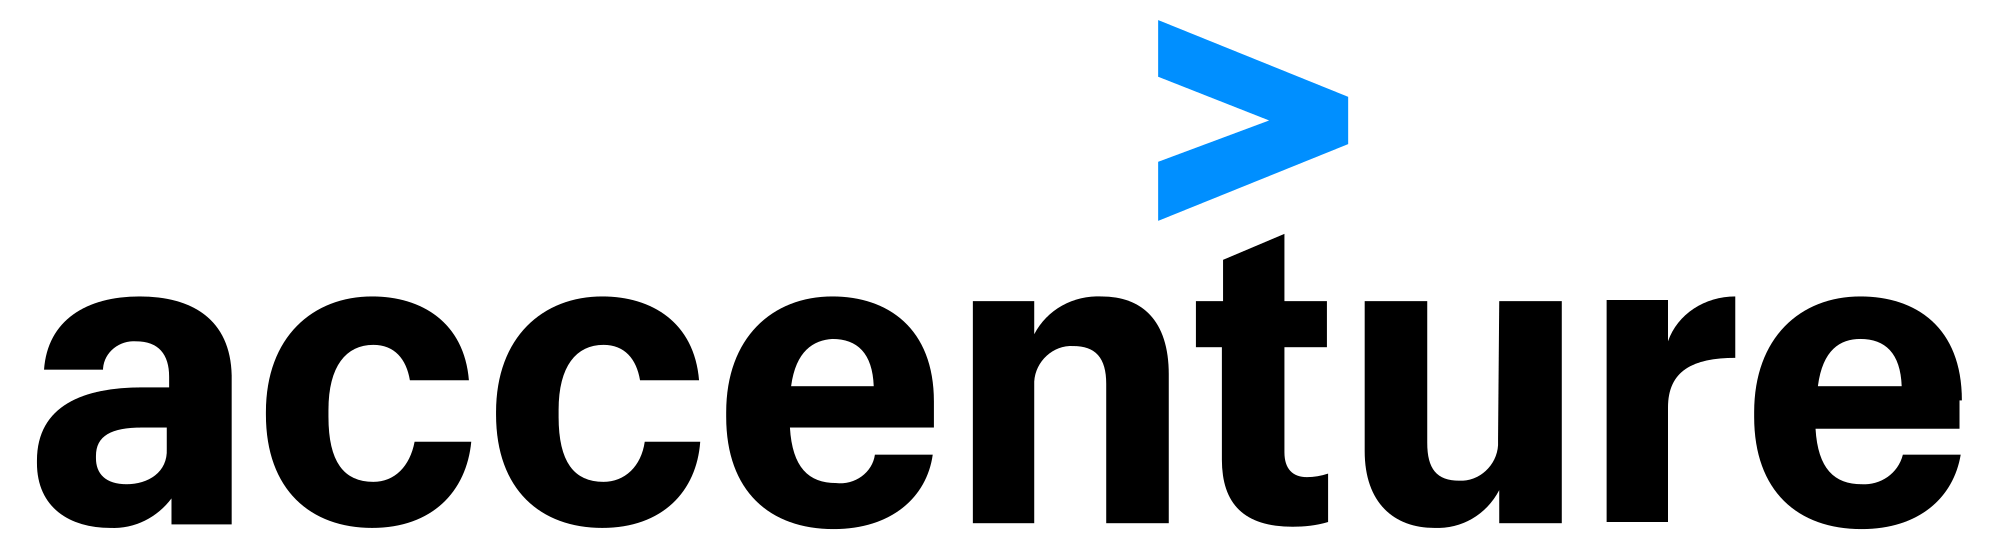 Accenture Logo - Accenture Logo Who TechLesbians Who Tech Community